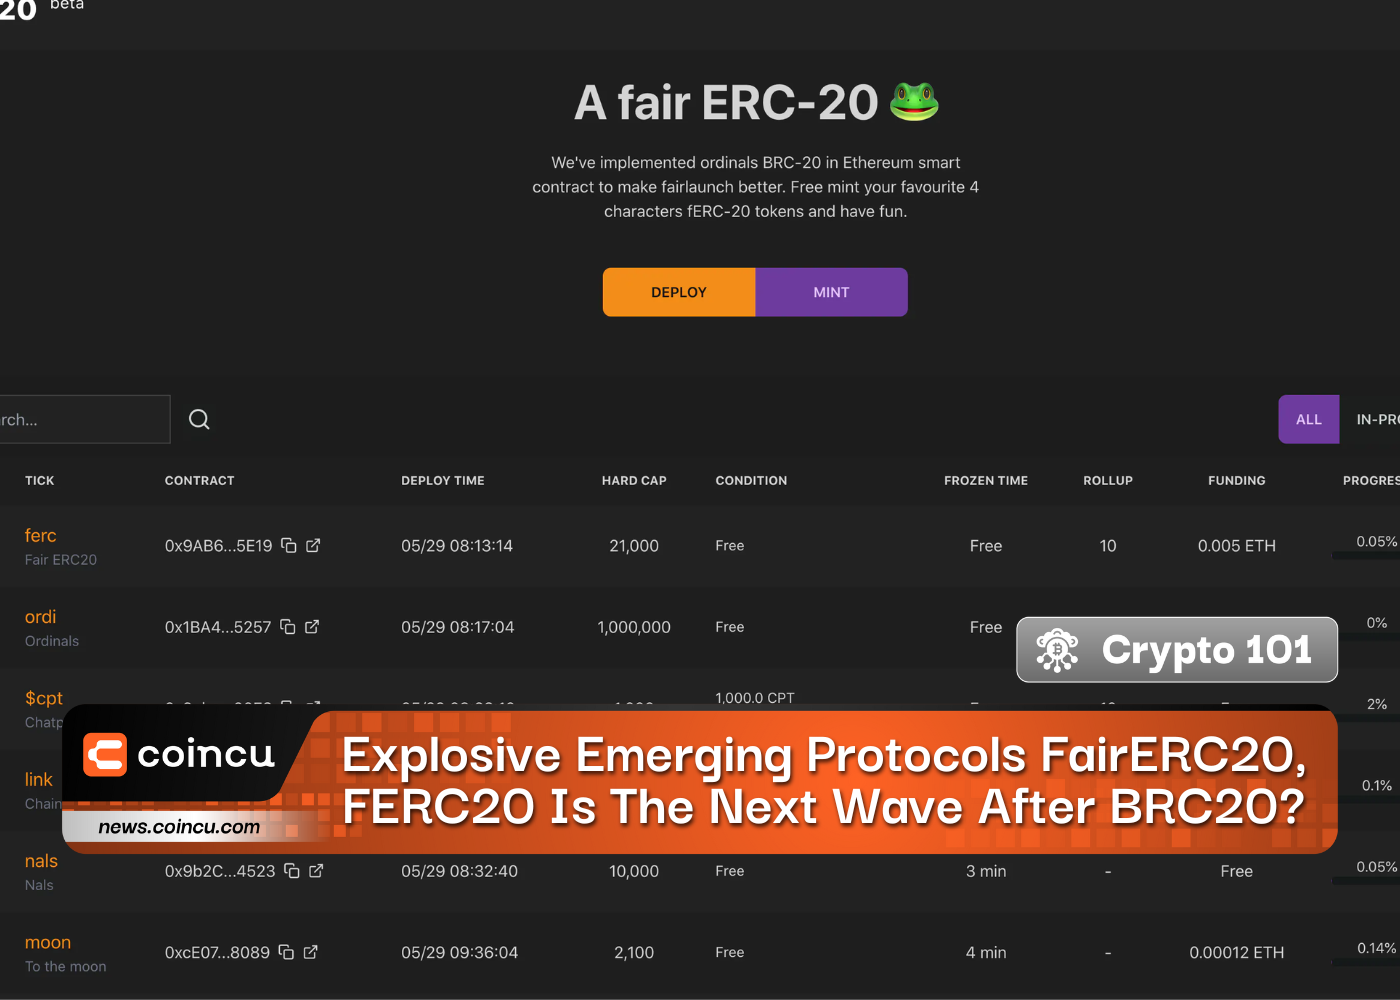 Explosive Emerging Protocols FairERC20, FERC20 Is The Next Wave After BRC20?